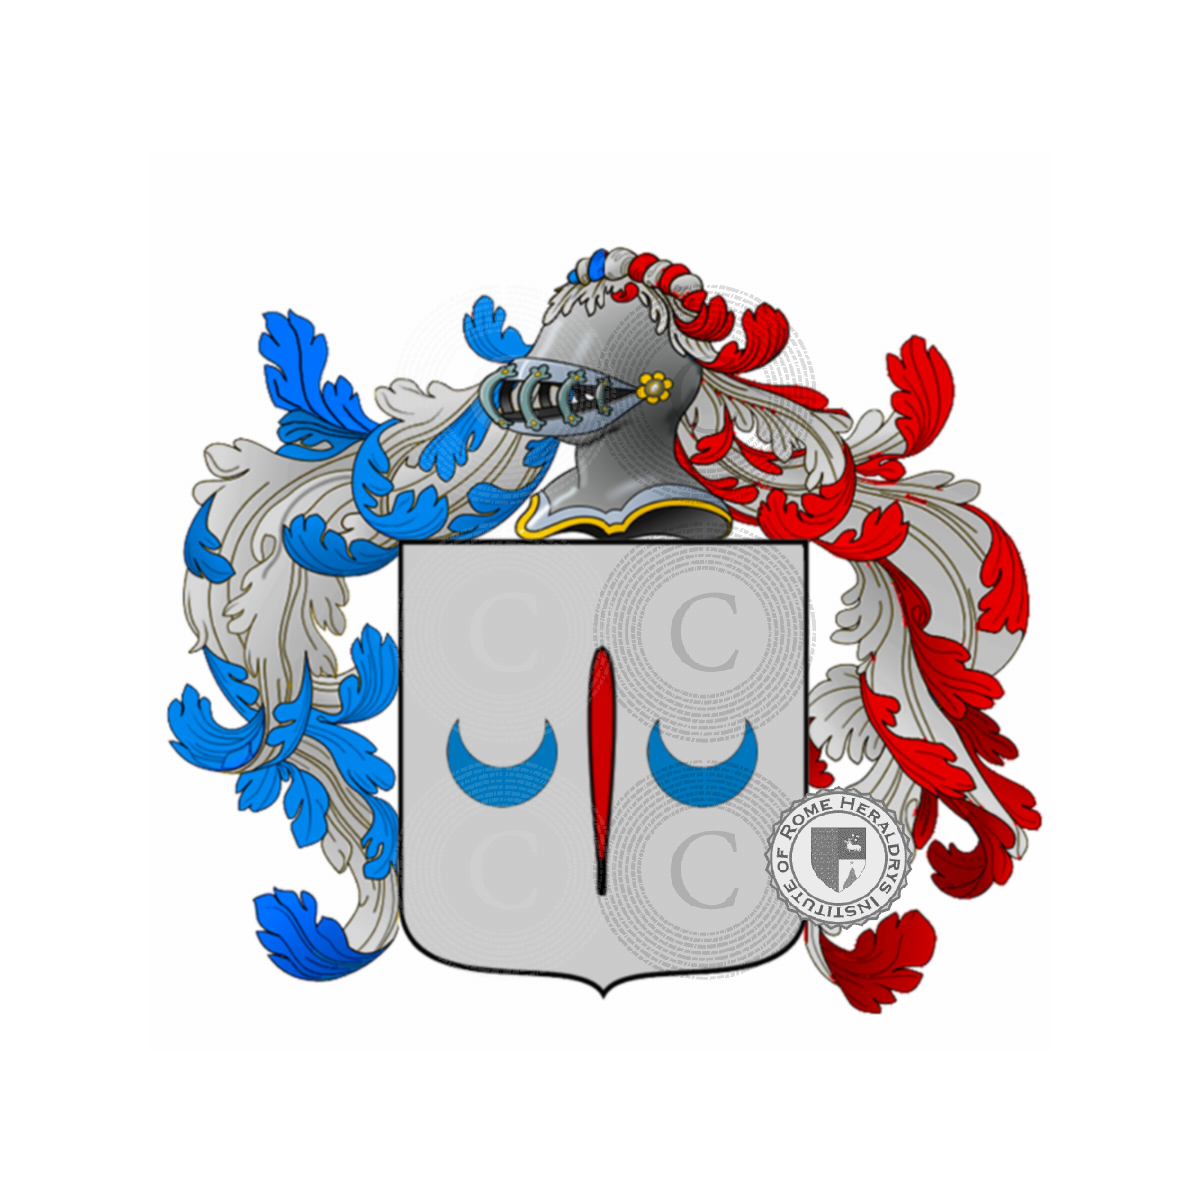 Wappen der FamilieOrlandini